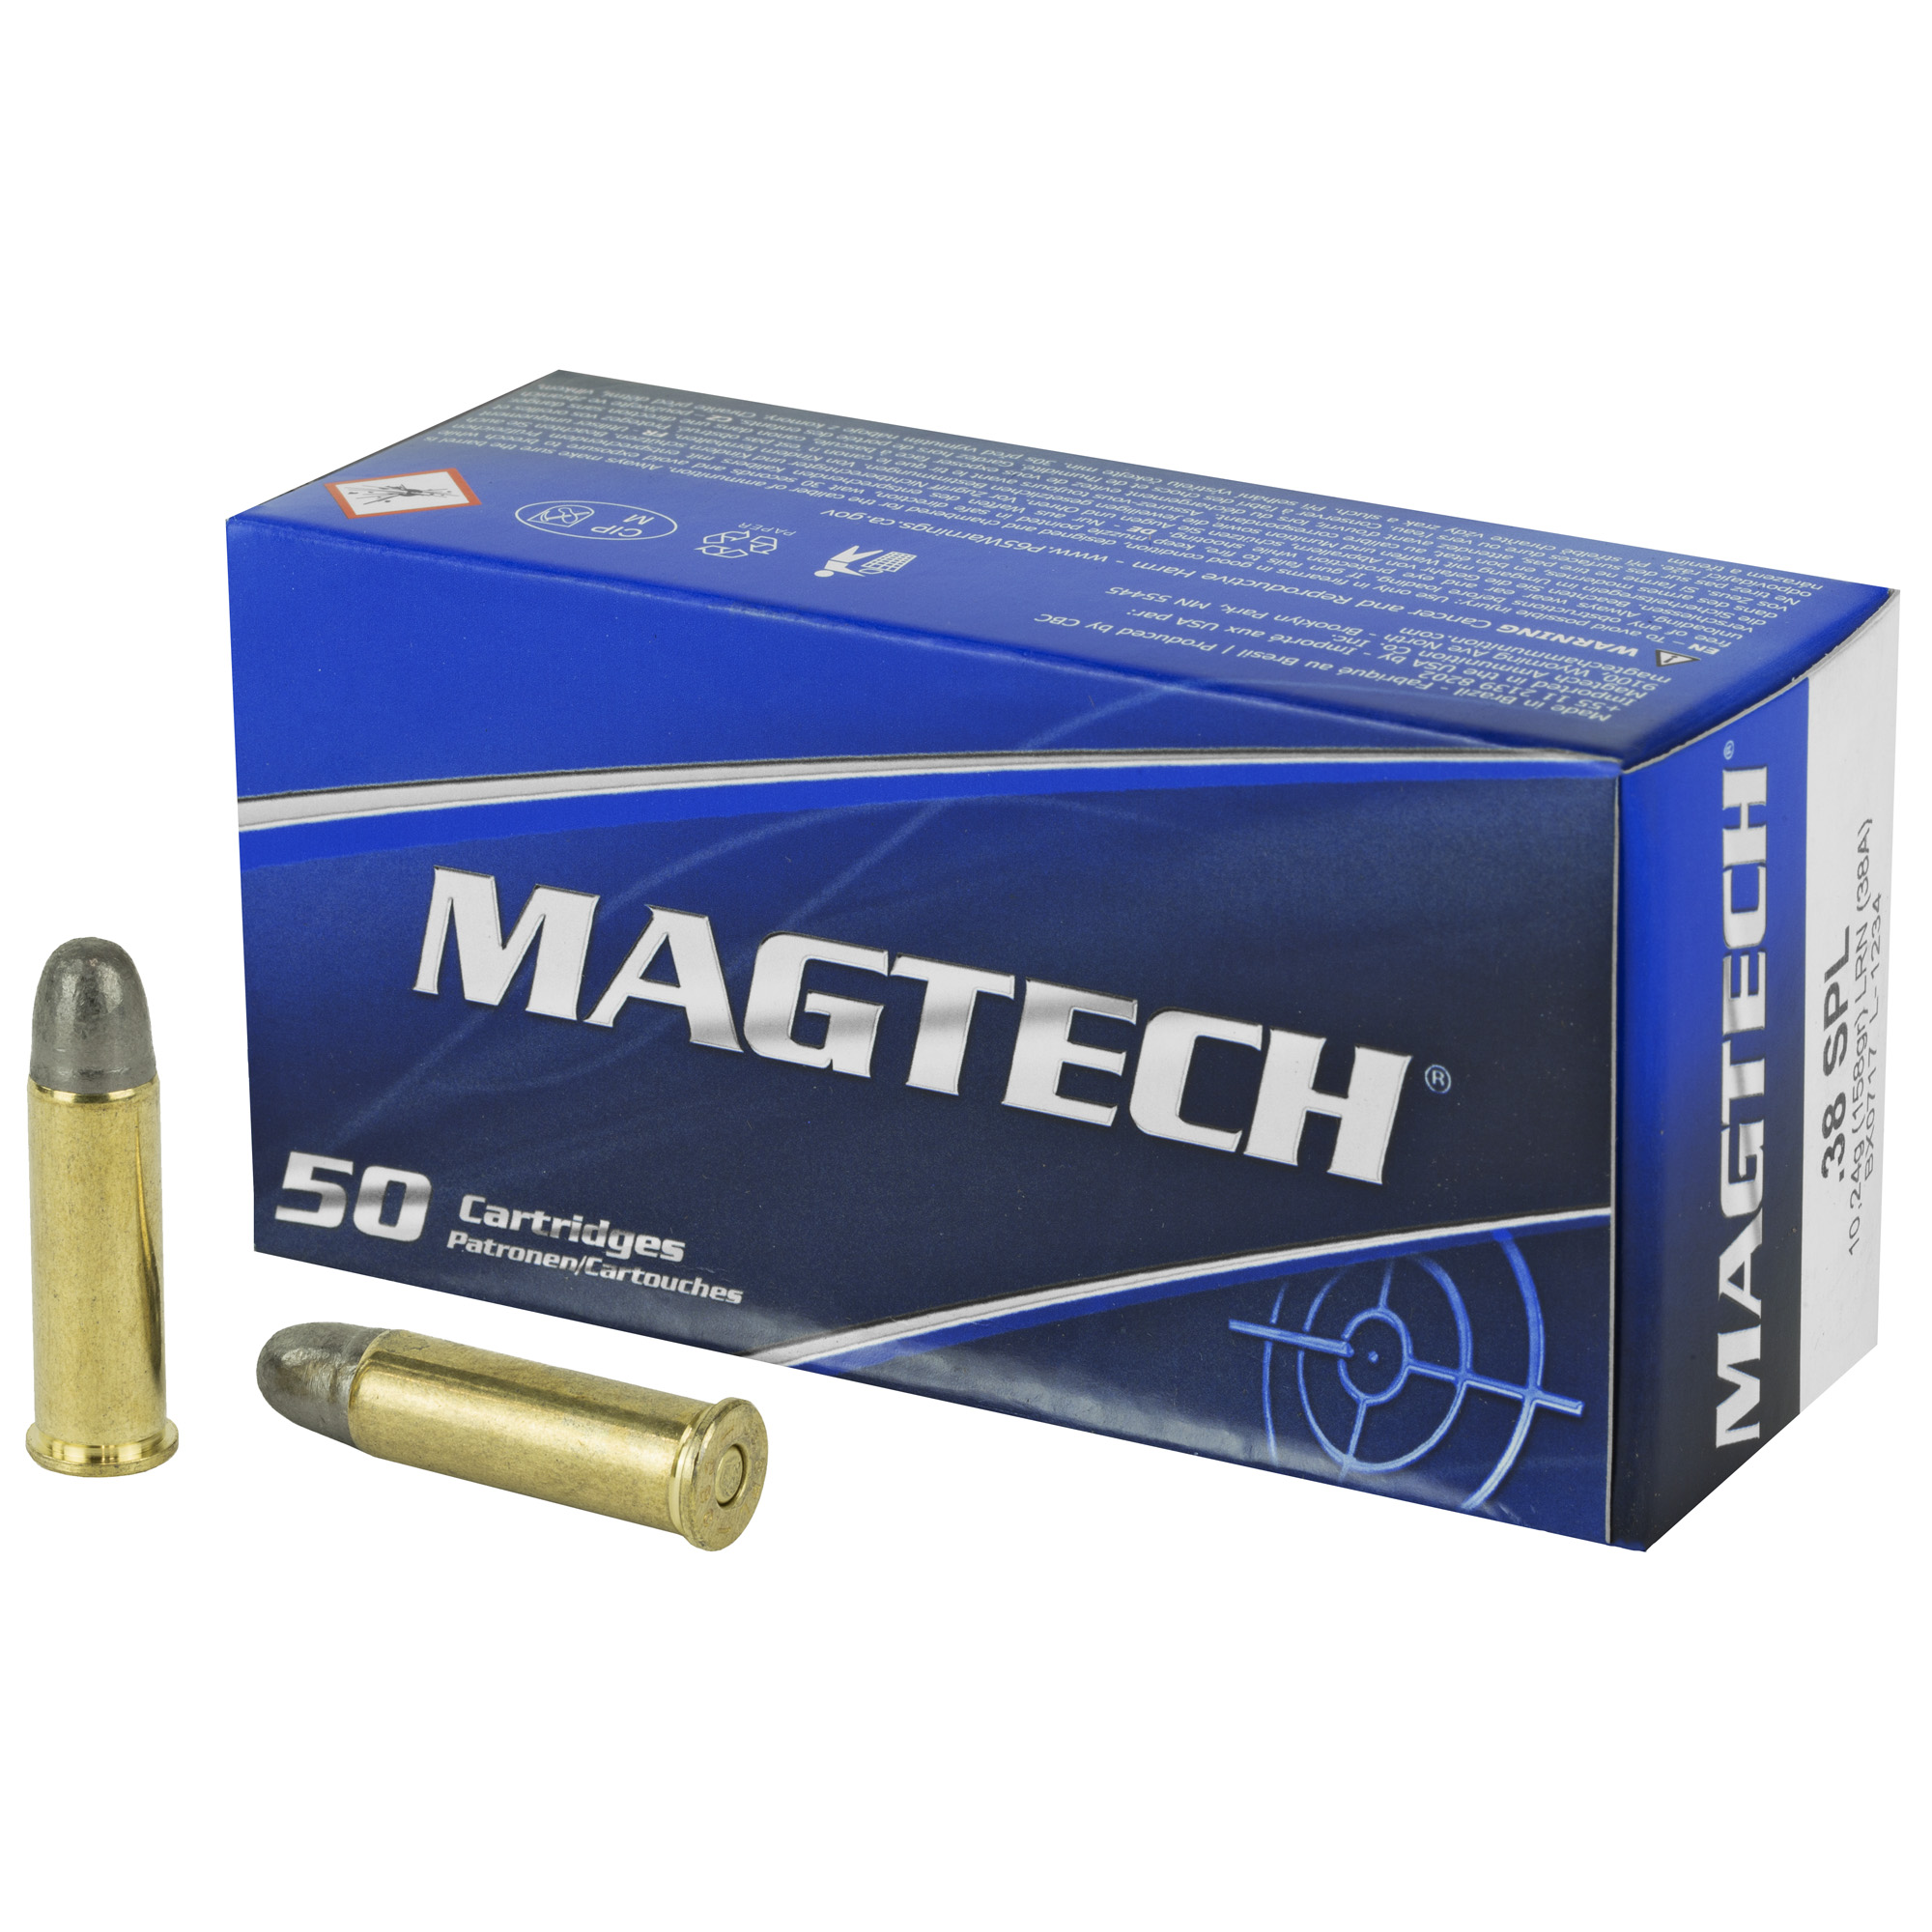 Magtech, Sport Shooting 38 Special Ammo, 158 Grain Semi JSP FN, 50 Rounds, 38A, UPC: 754908105014